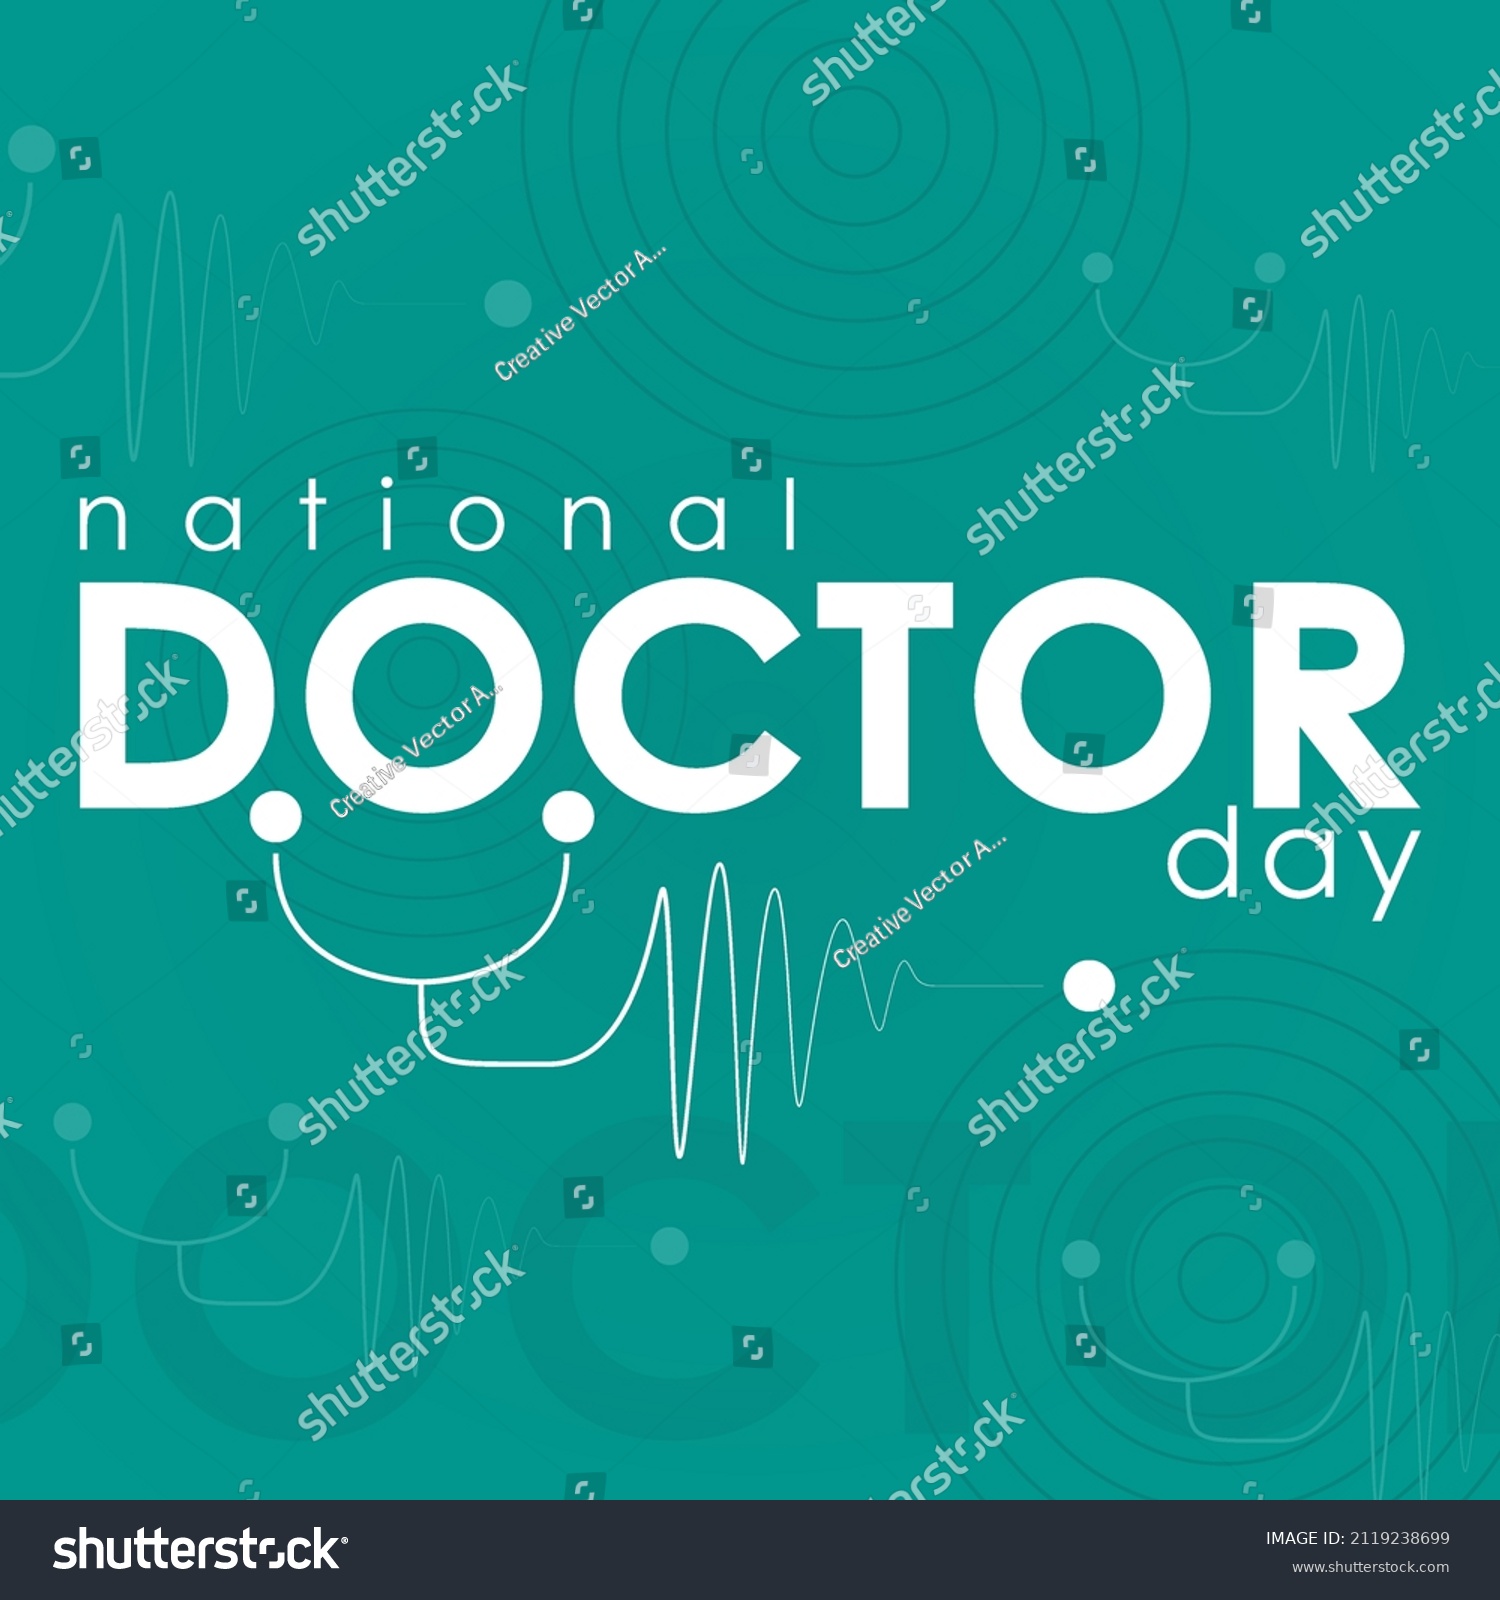 21,908 International doctors day Images, Stock Photos & Vectors